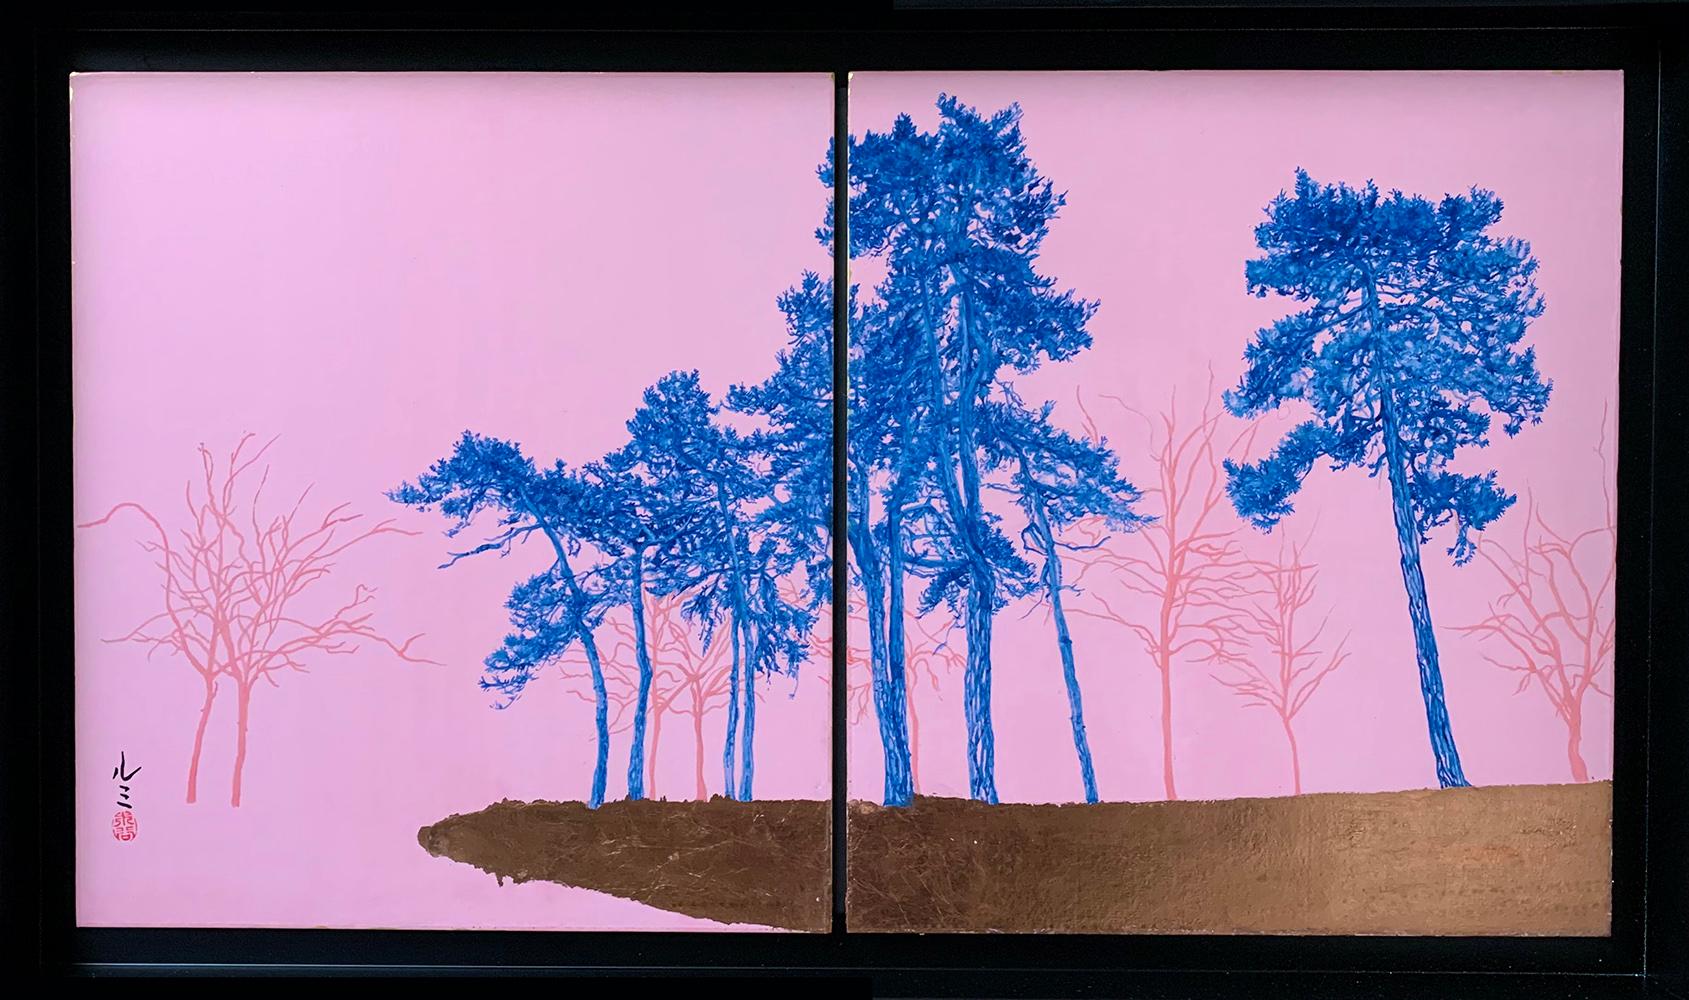 Blue Pines - Day Porters by Lumi Mizutani - Japanese style landscape painting